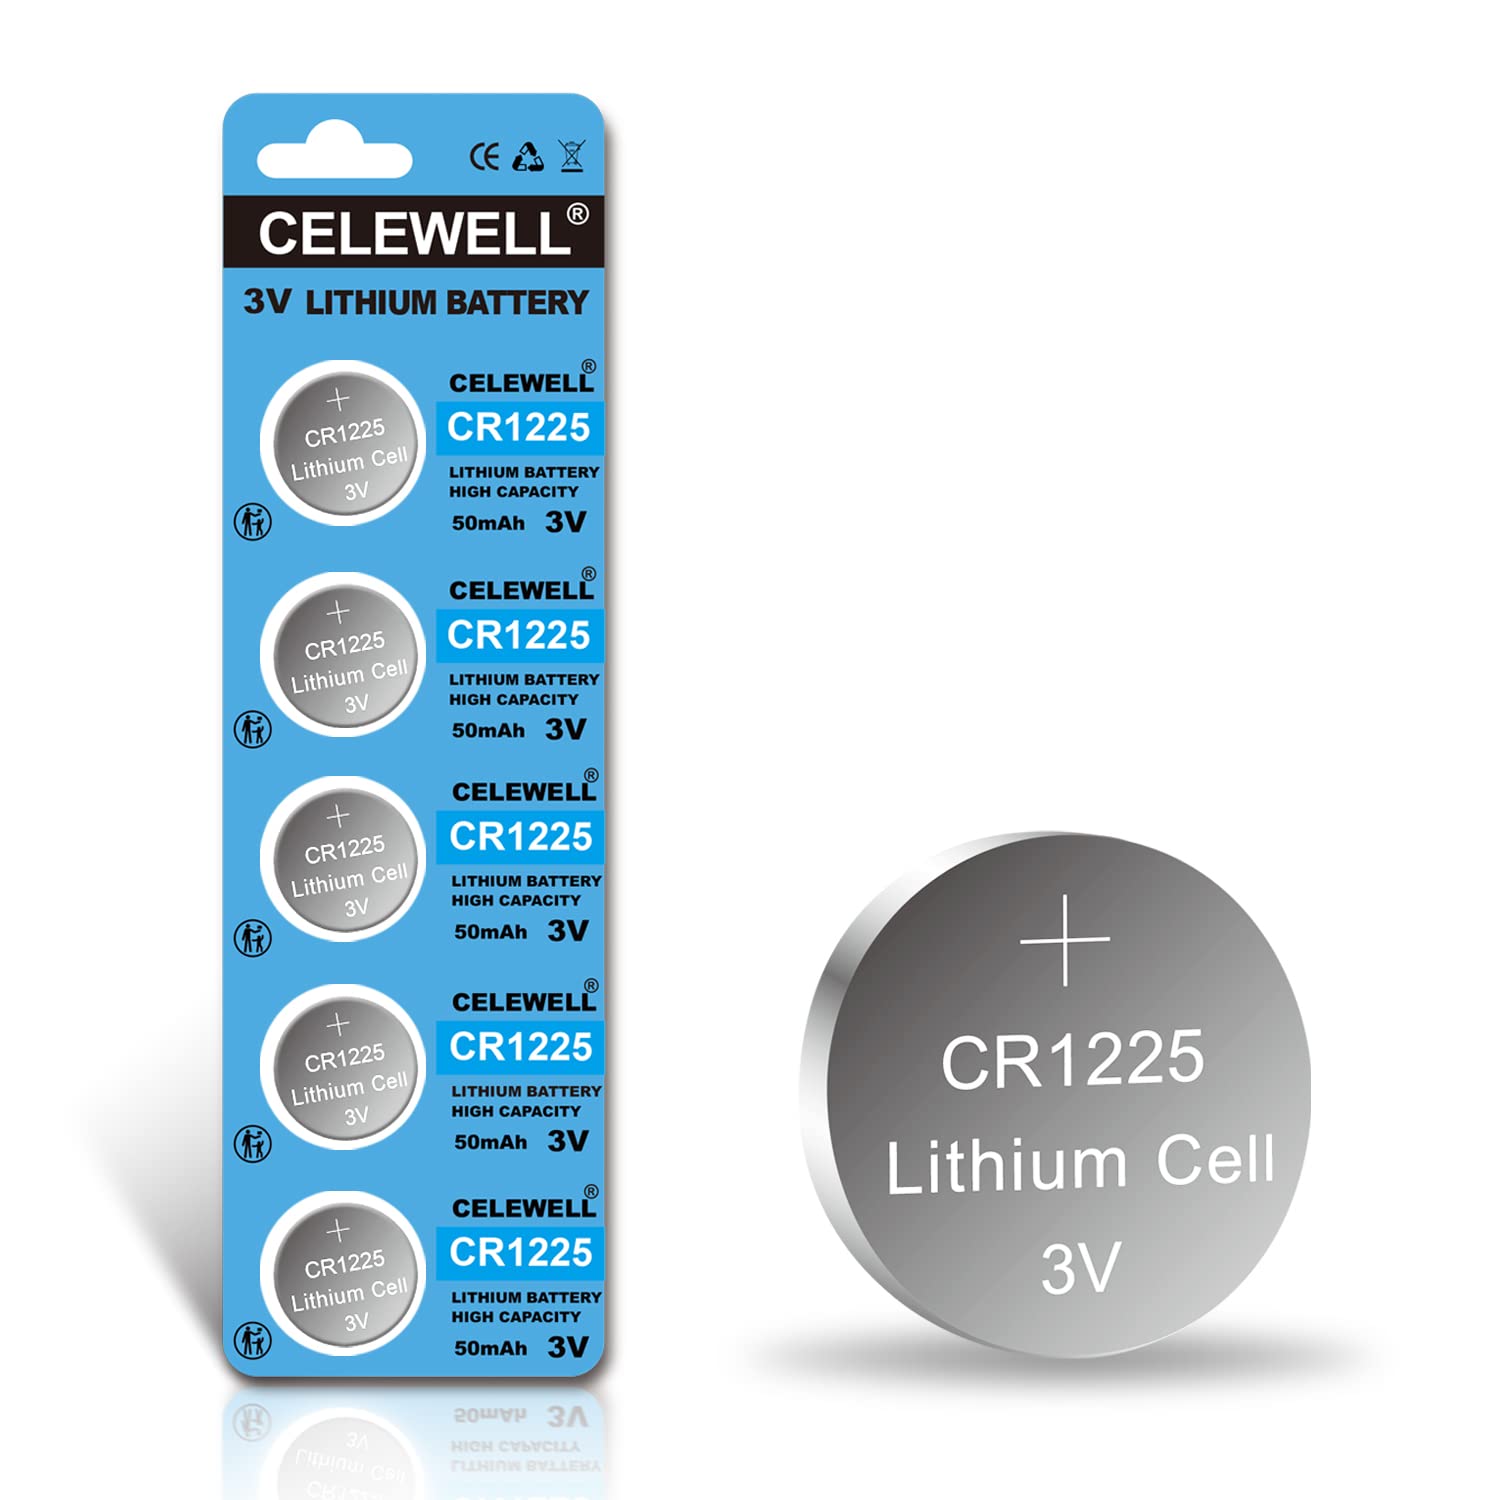 CELEWELL 【5-Year Warranty】 5 Pack CR1225 3V Lithium Battery